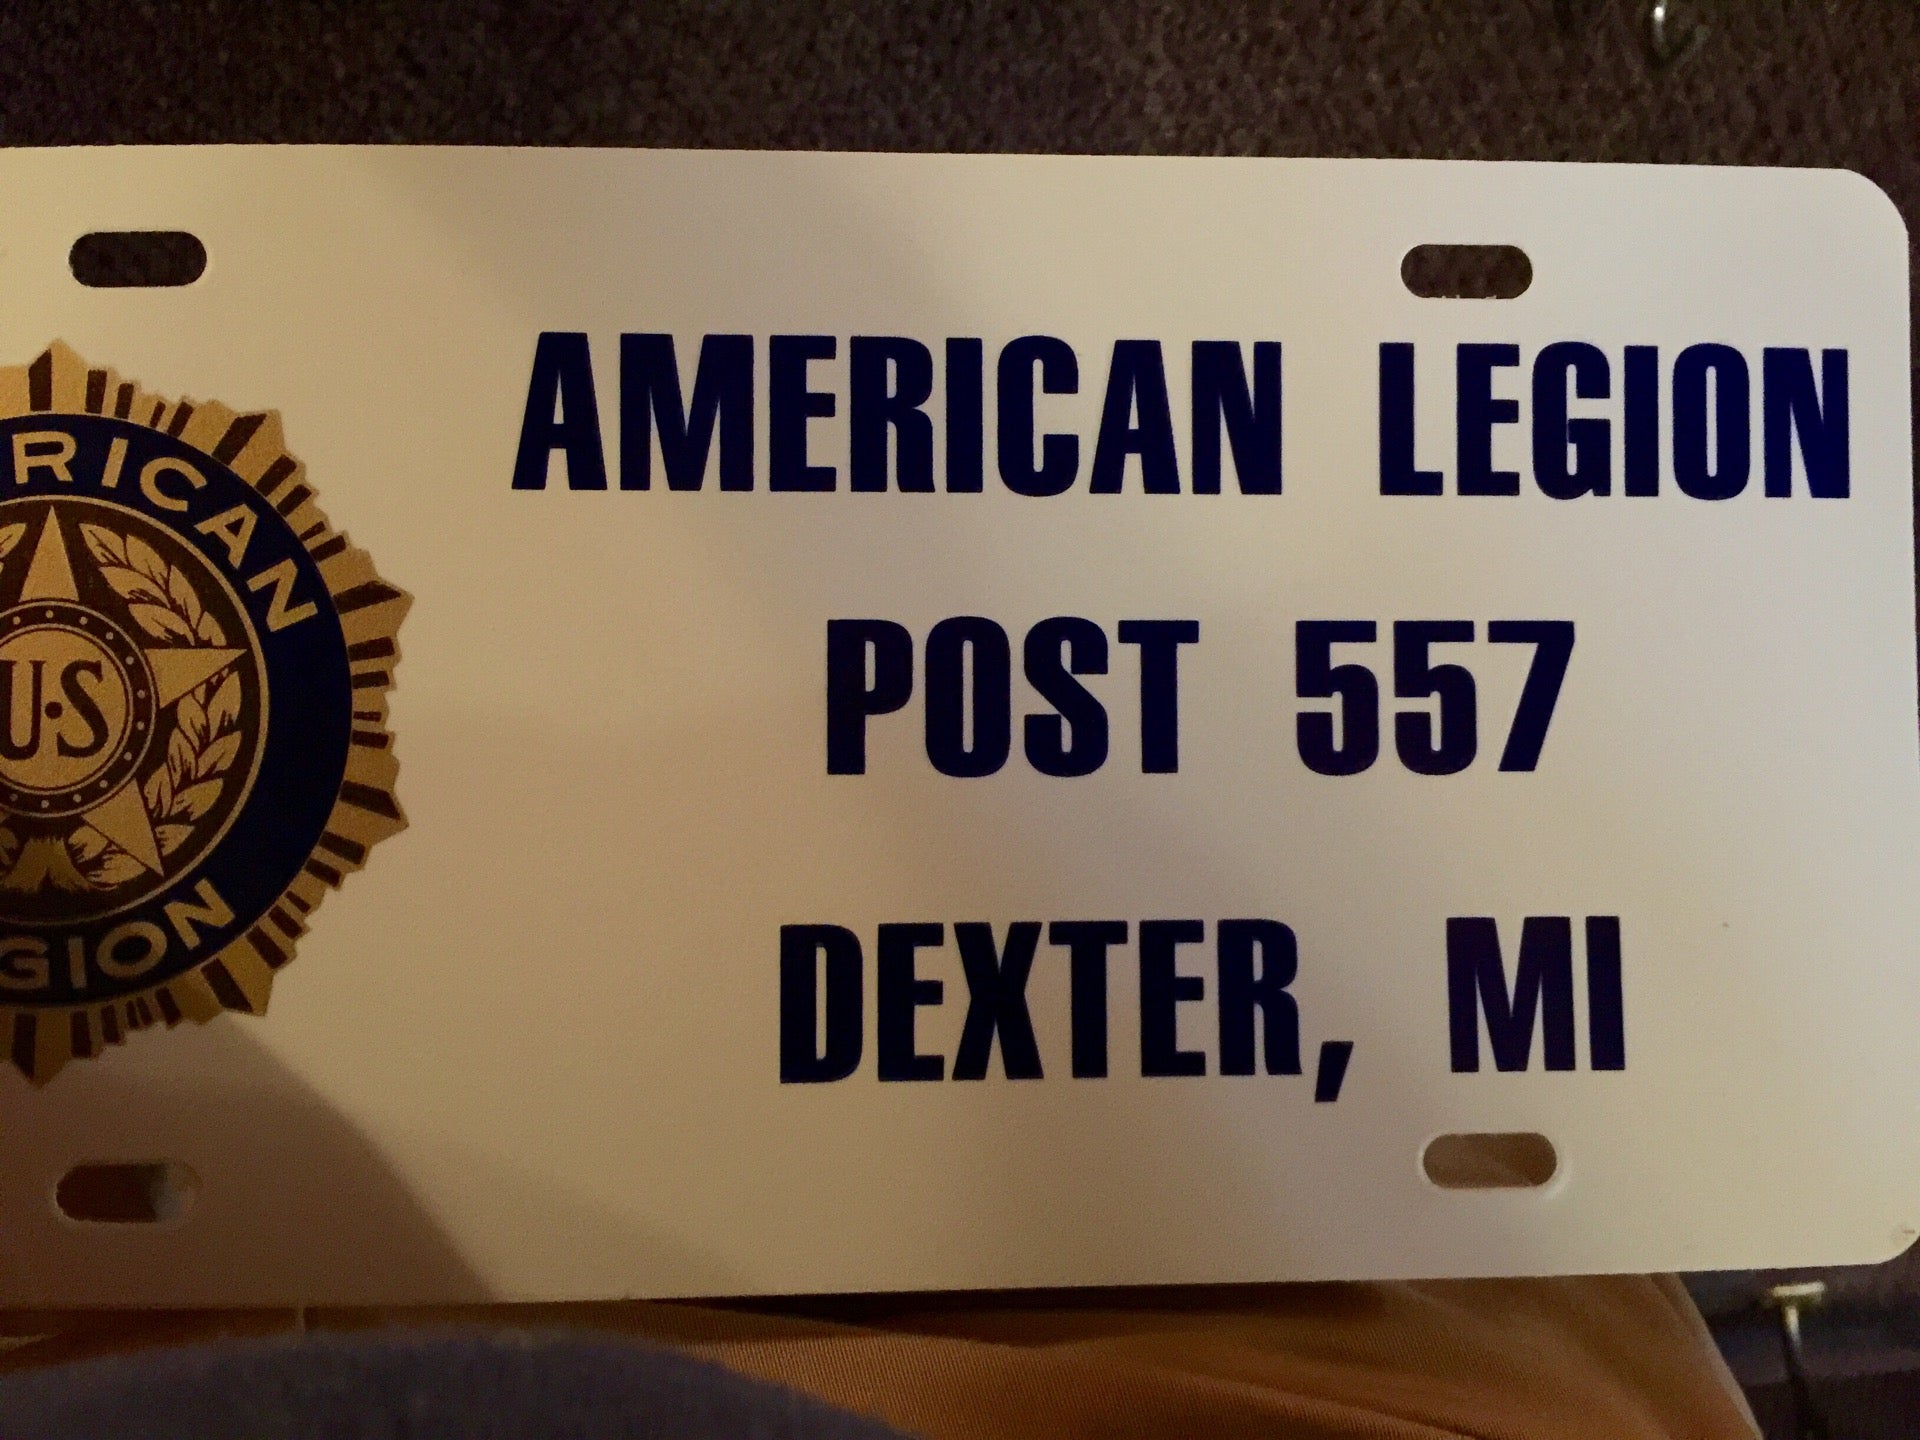 American Legion Post 557 8225 Dexter-Chelsea Rd, Dexter Michigan 48130